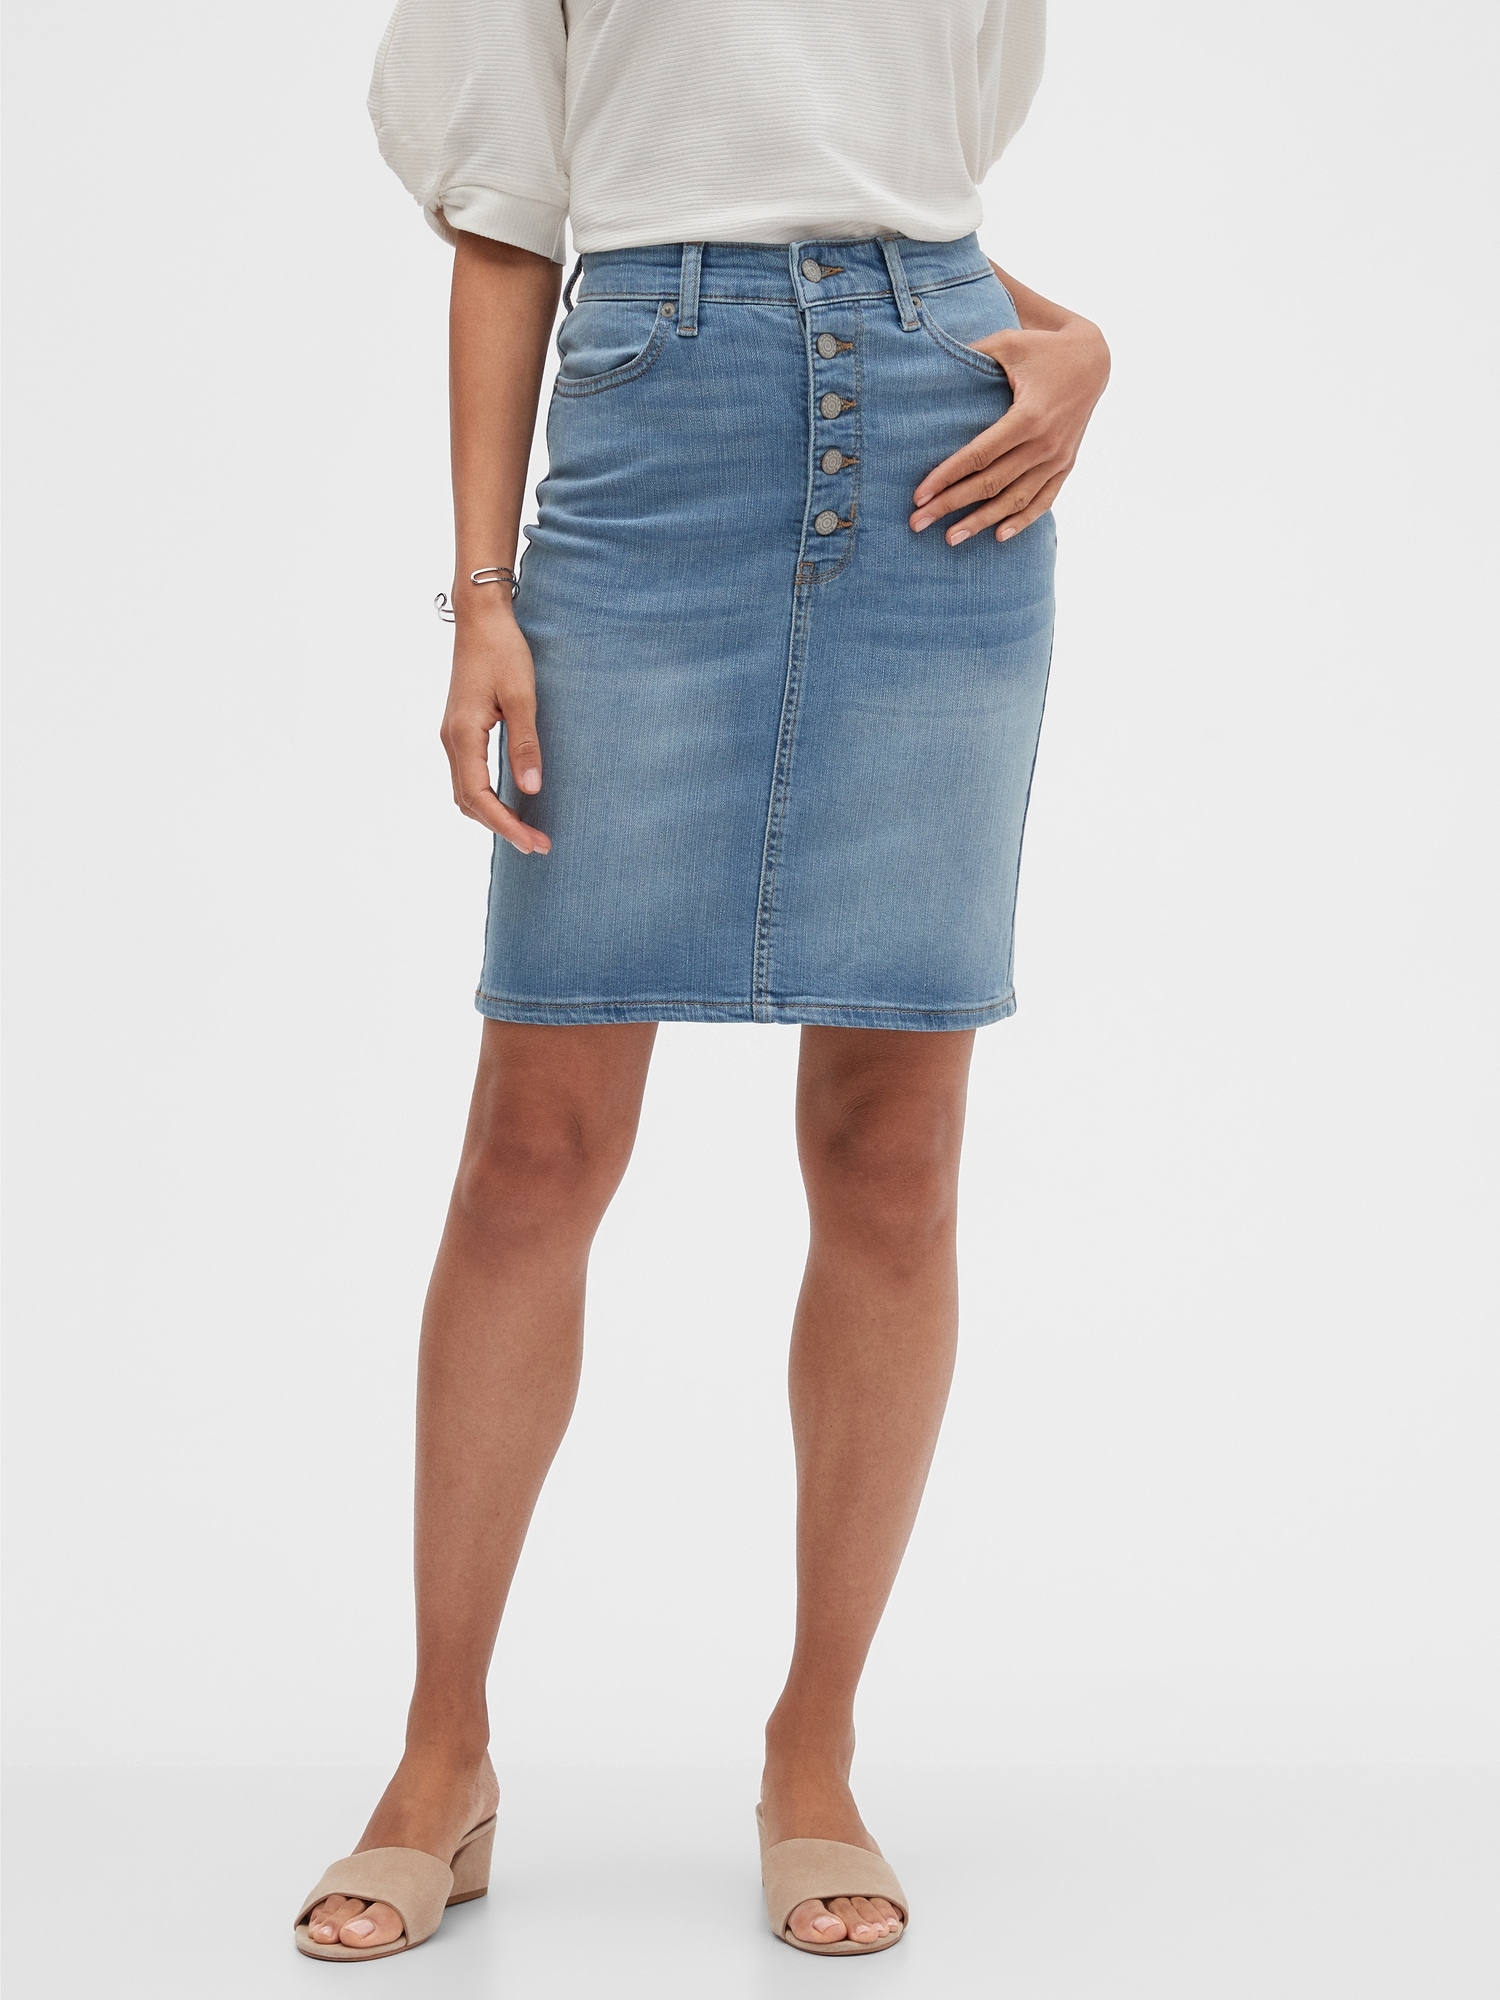 YOURS PETITE Plus Size Curve Blue Denim Midi Skirt | Yours Clothing